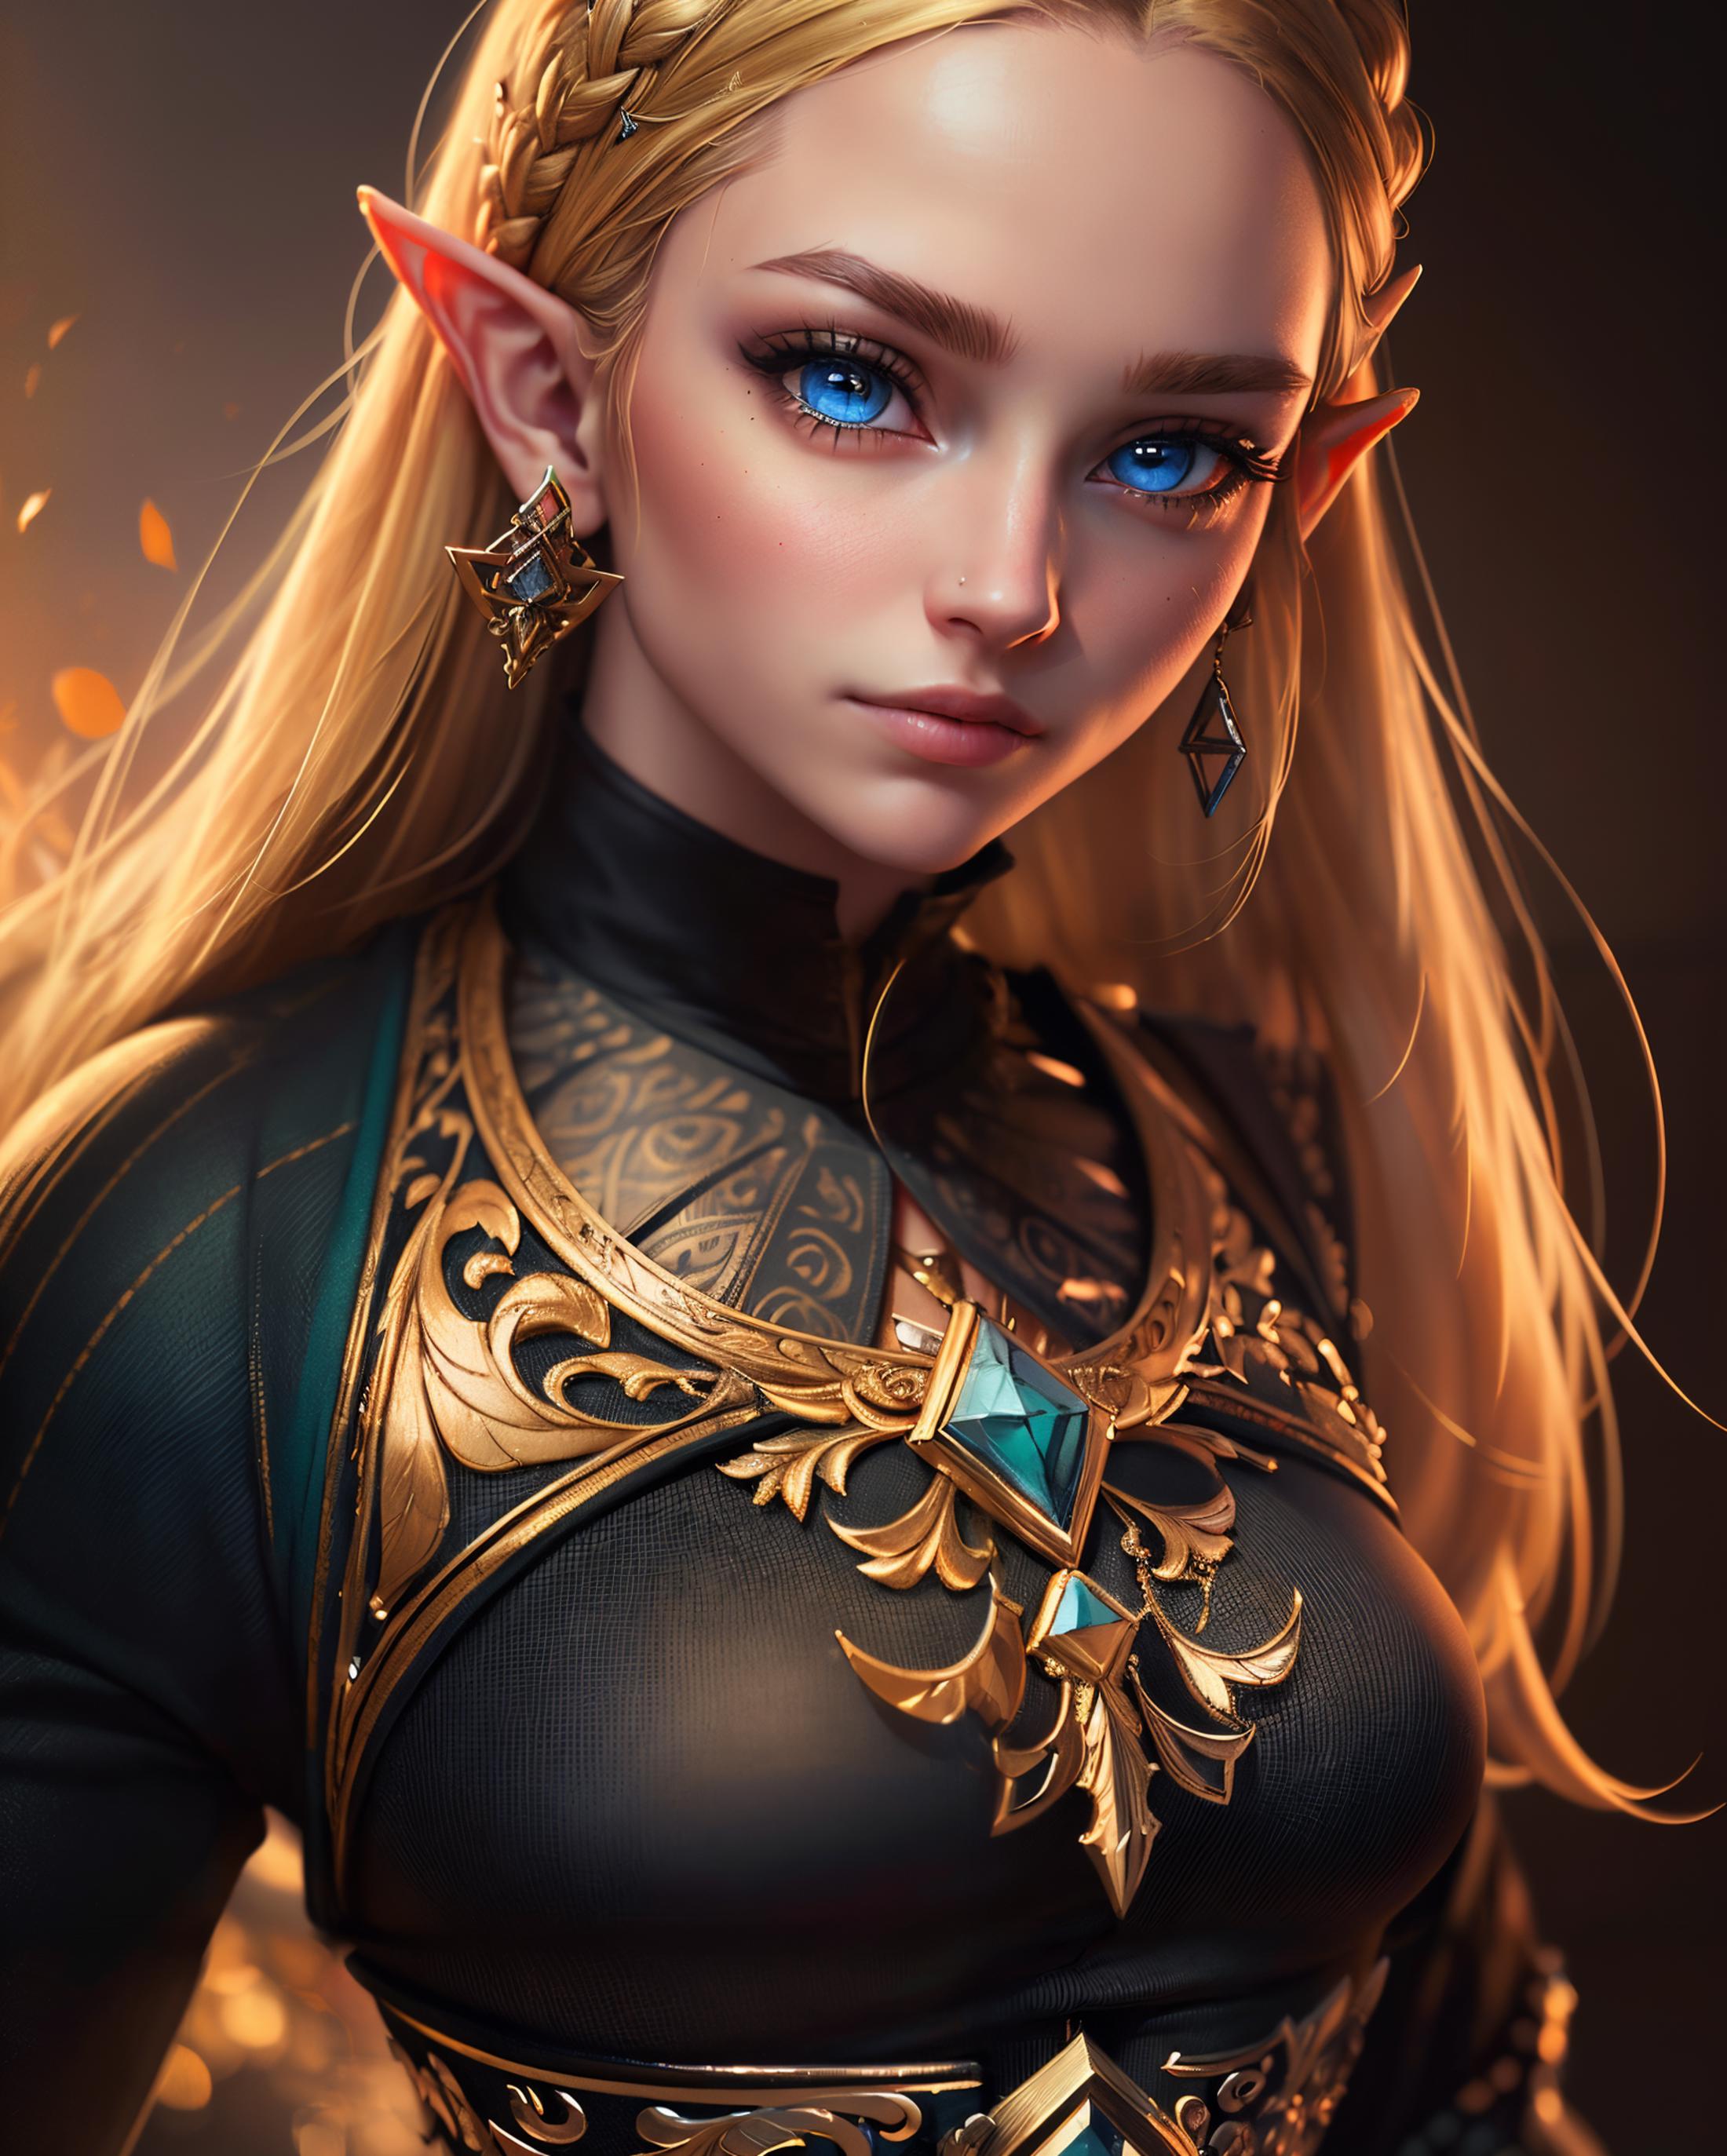 Princess Zelda LoRA image by antiseptique